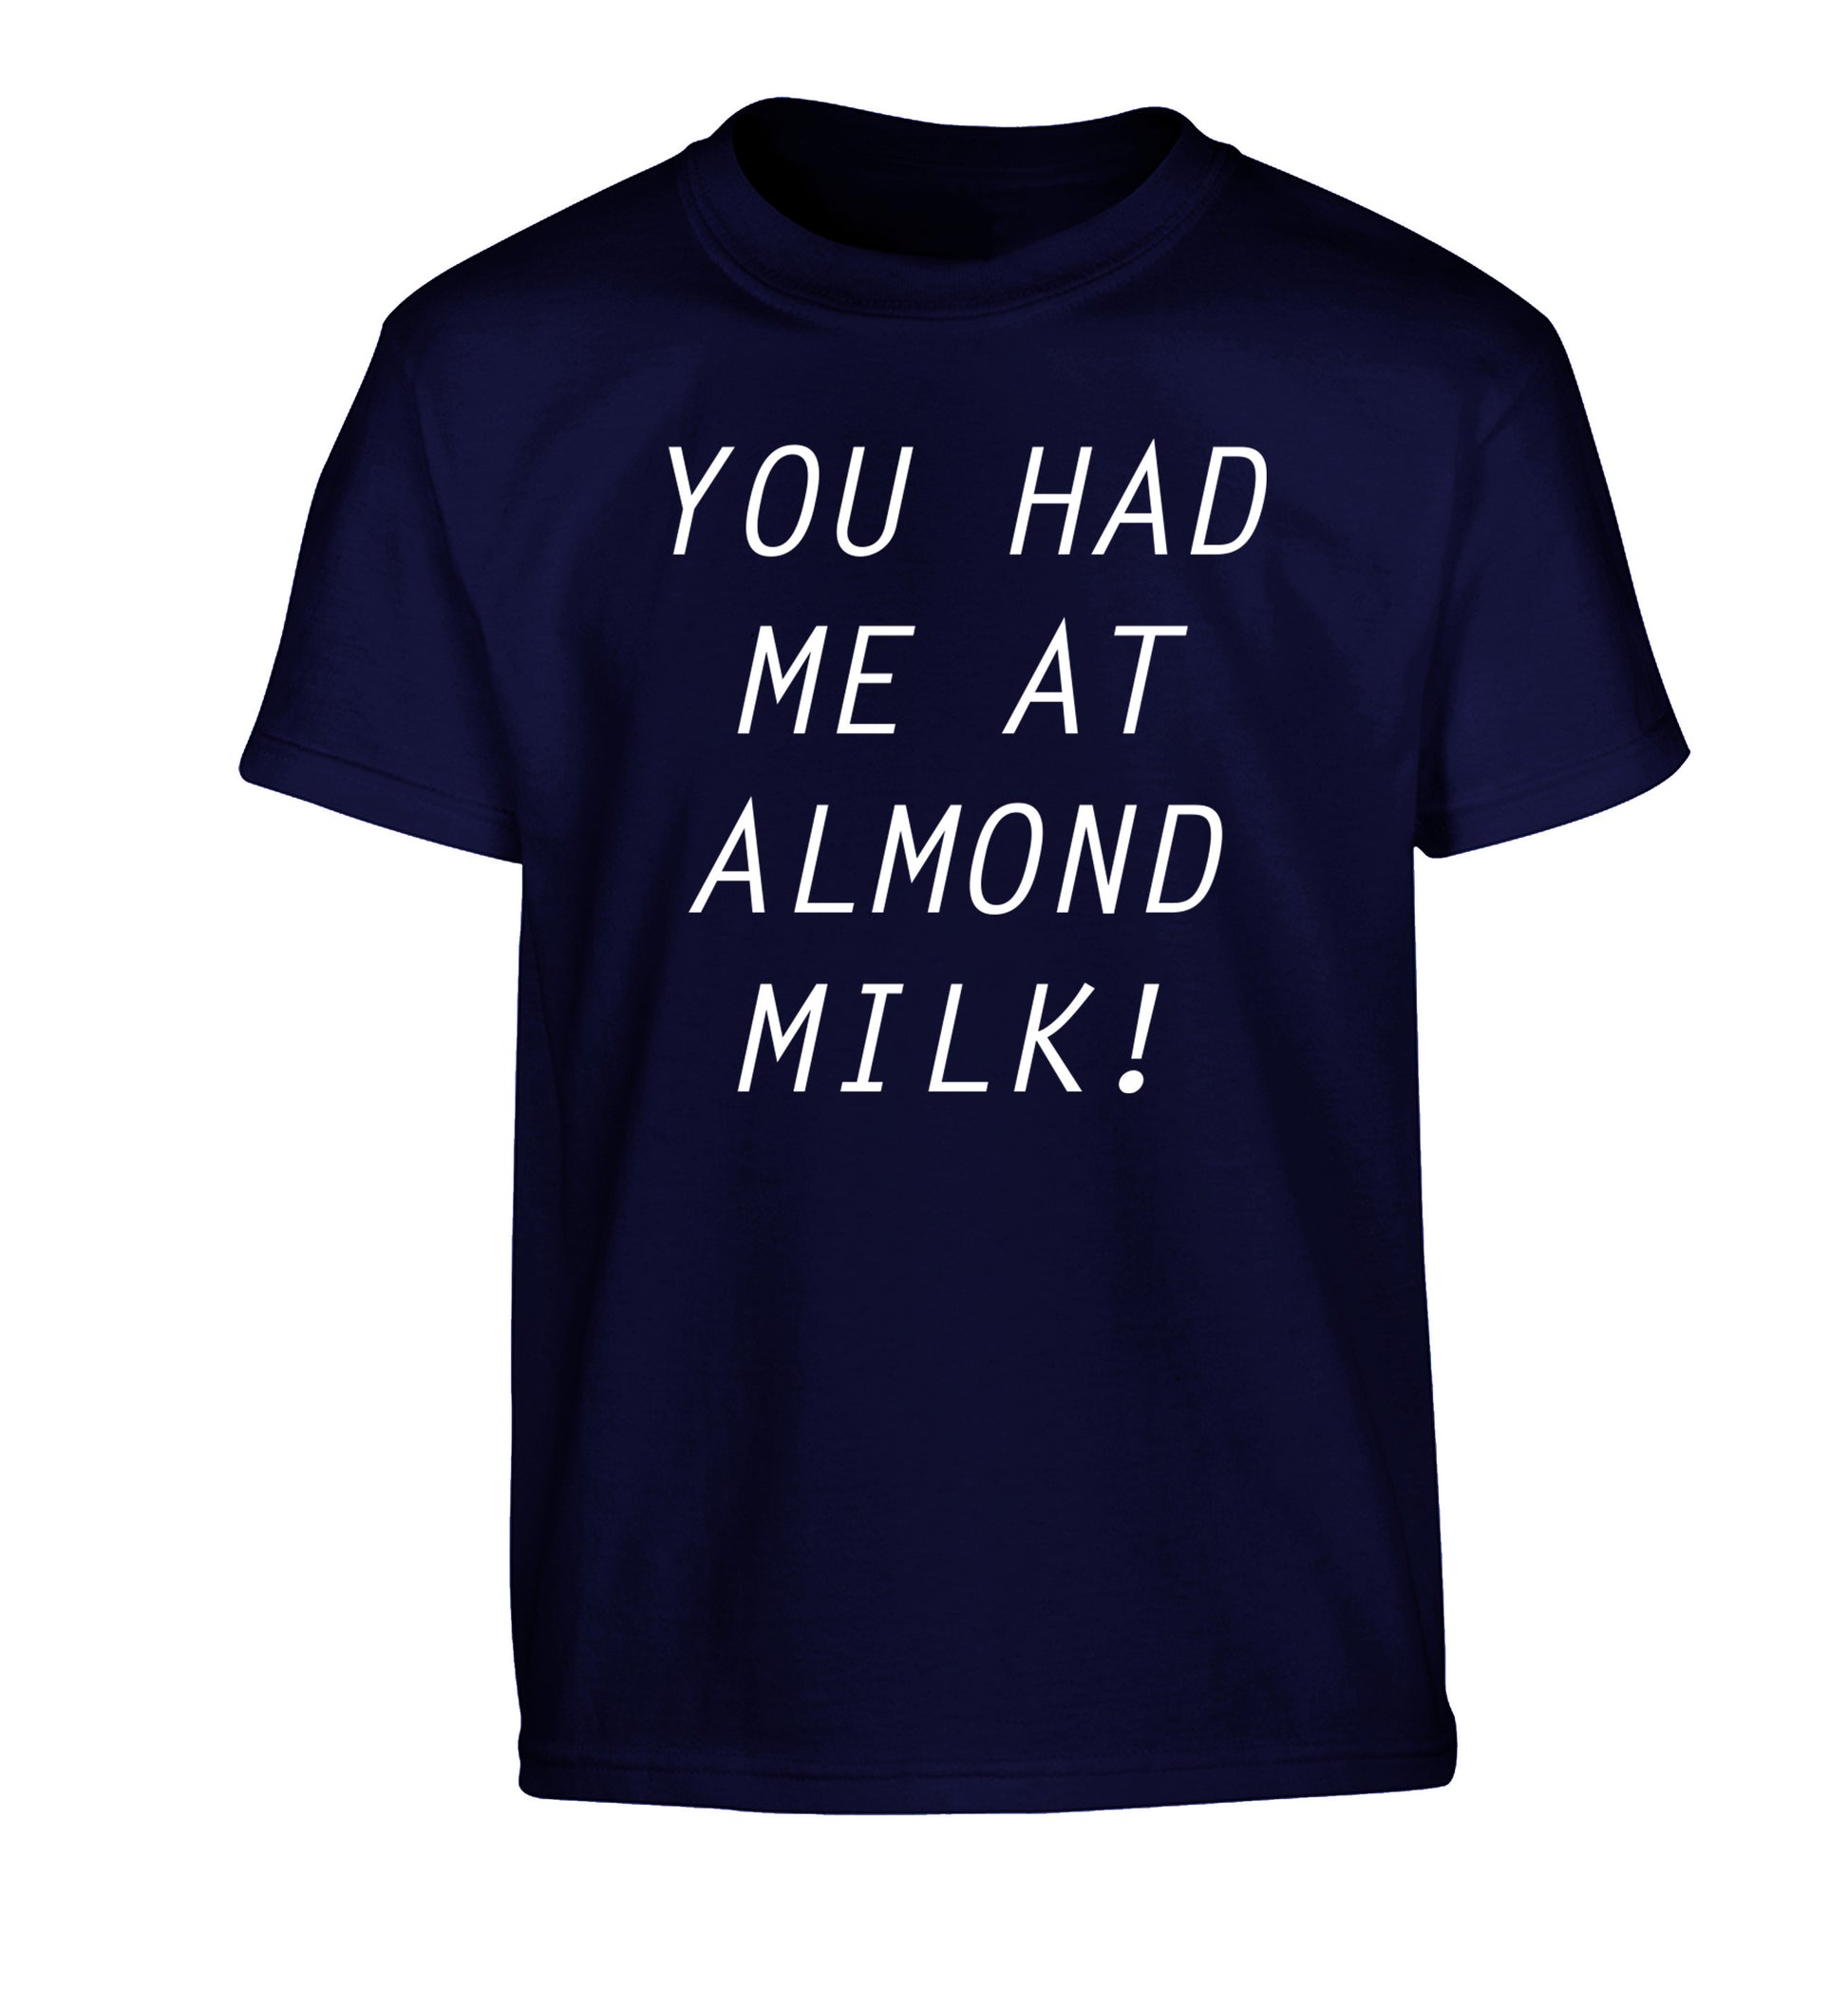 You had me at almond milk Children's navy Tshirt 12-14 Years